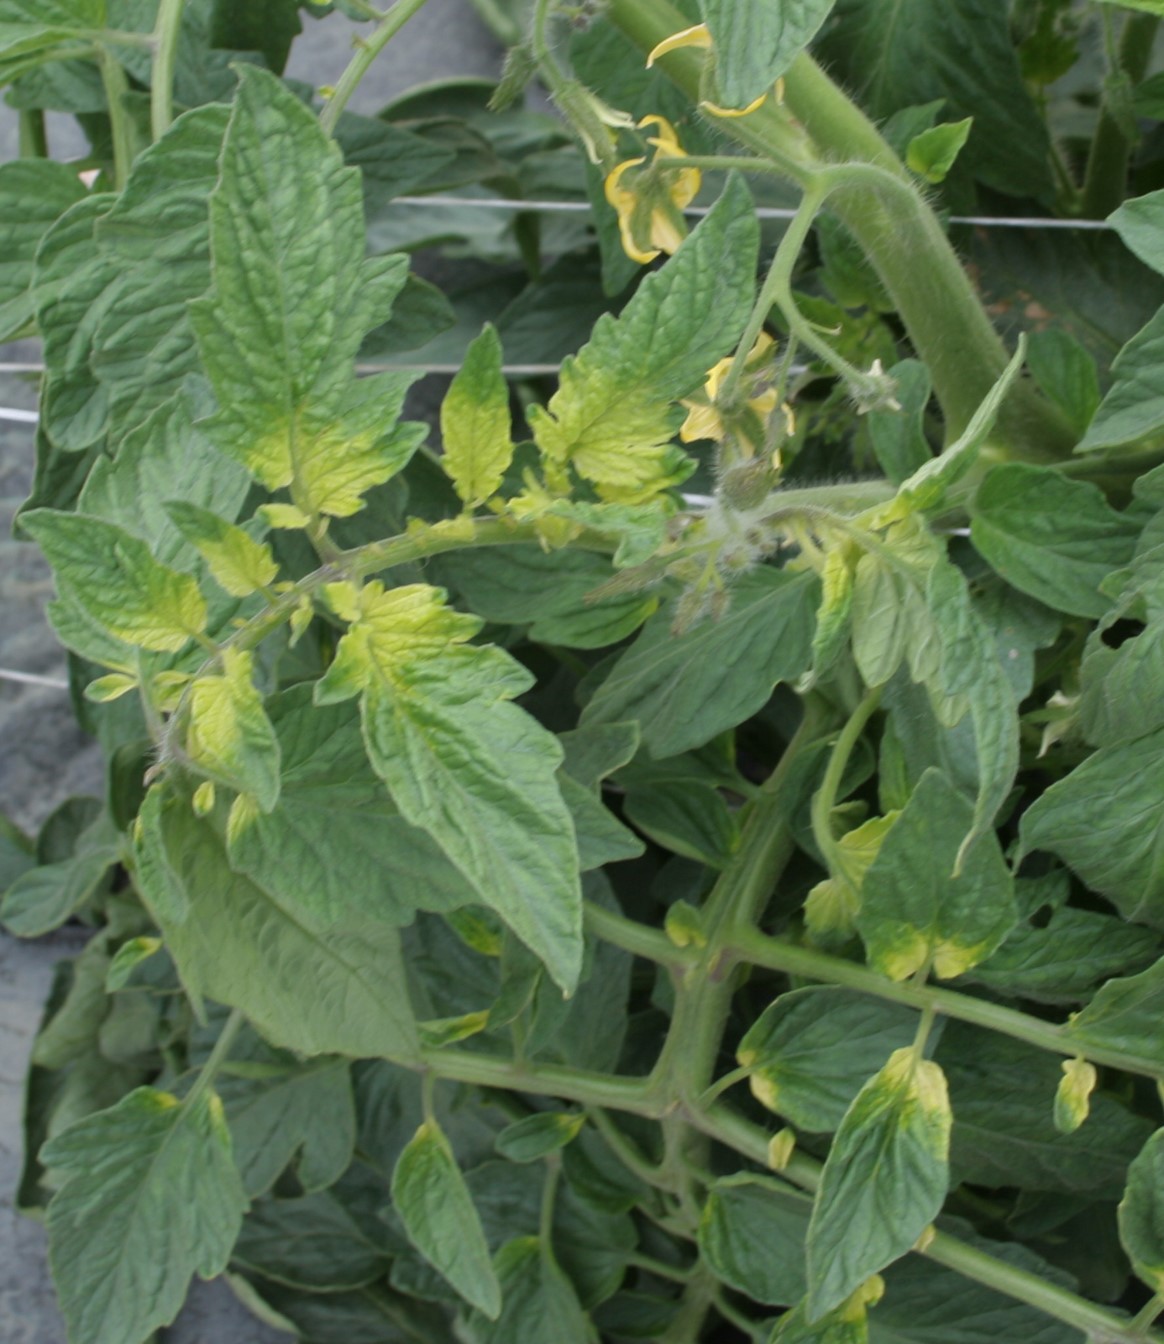 Glyphosate injury to tomato plants.